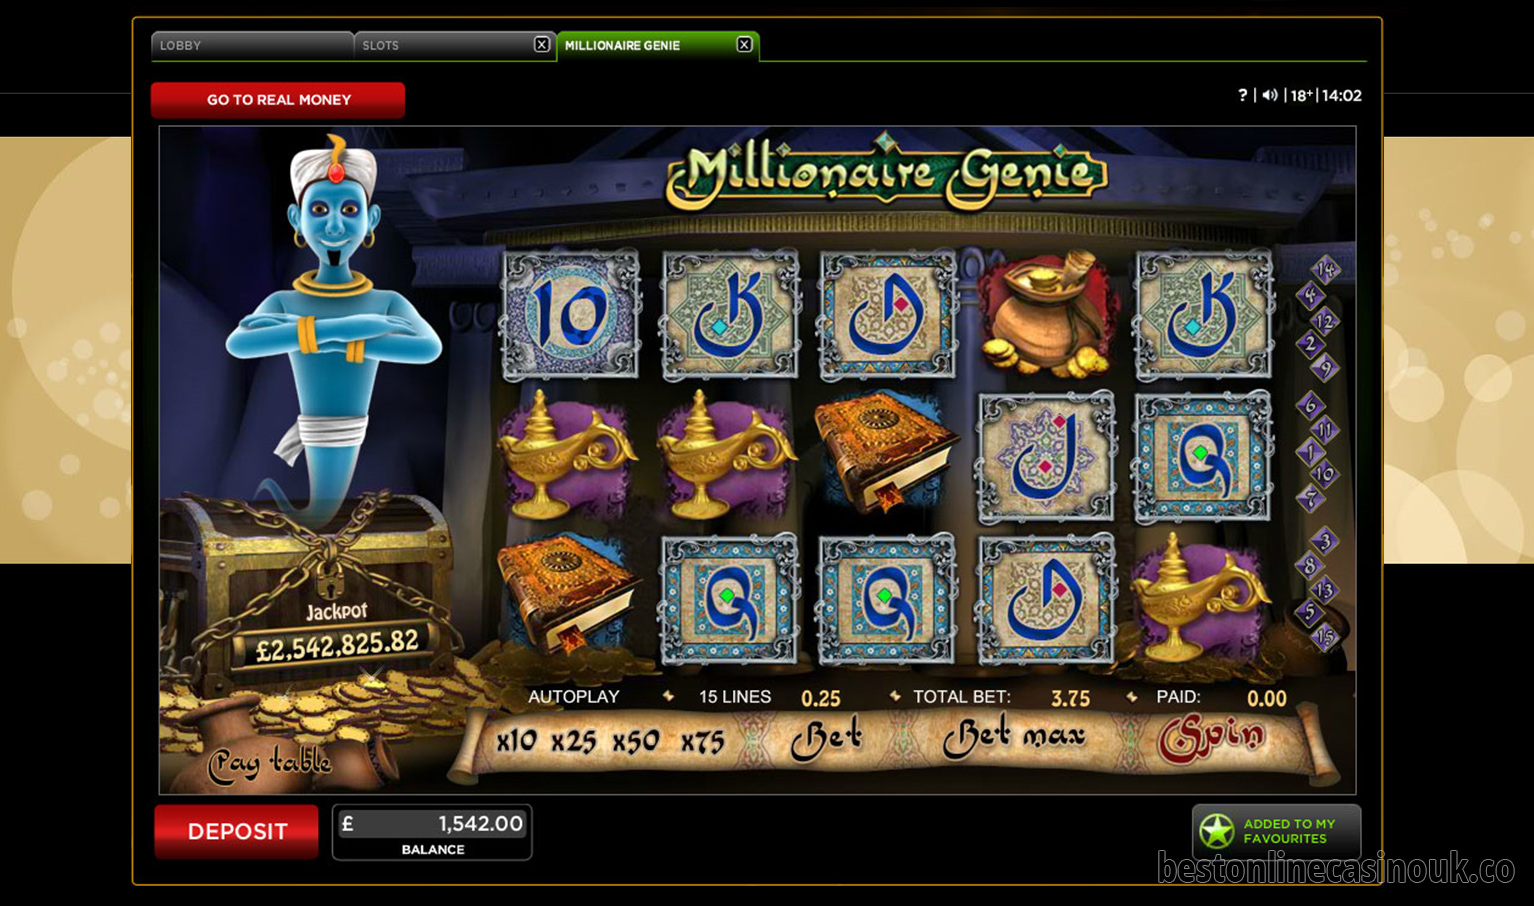 888 Casino USA for mac download free